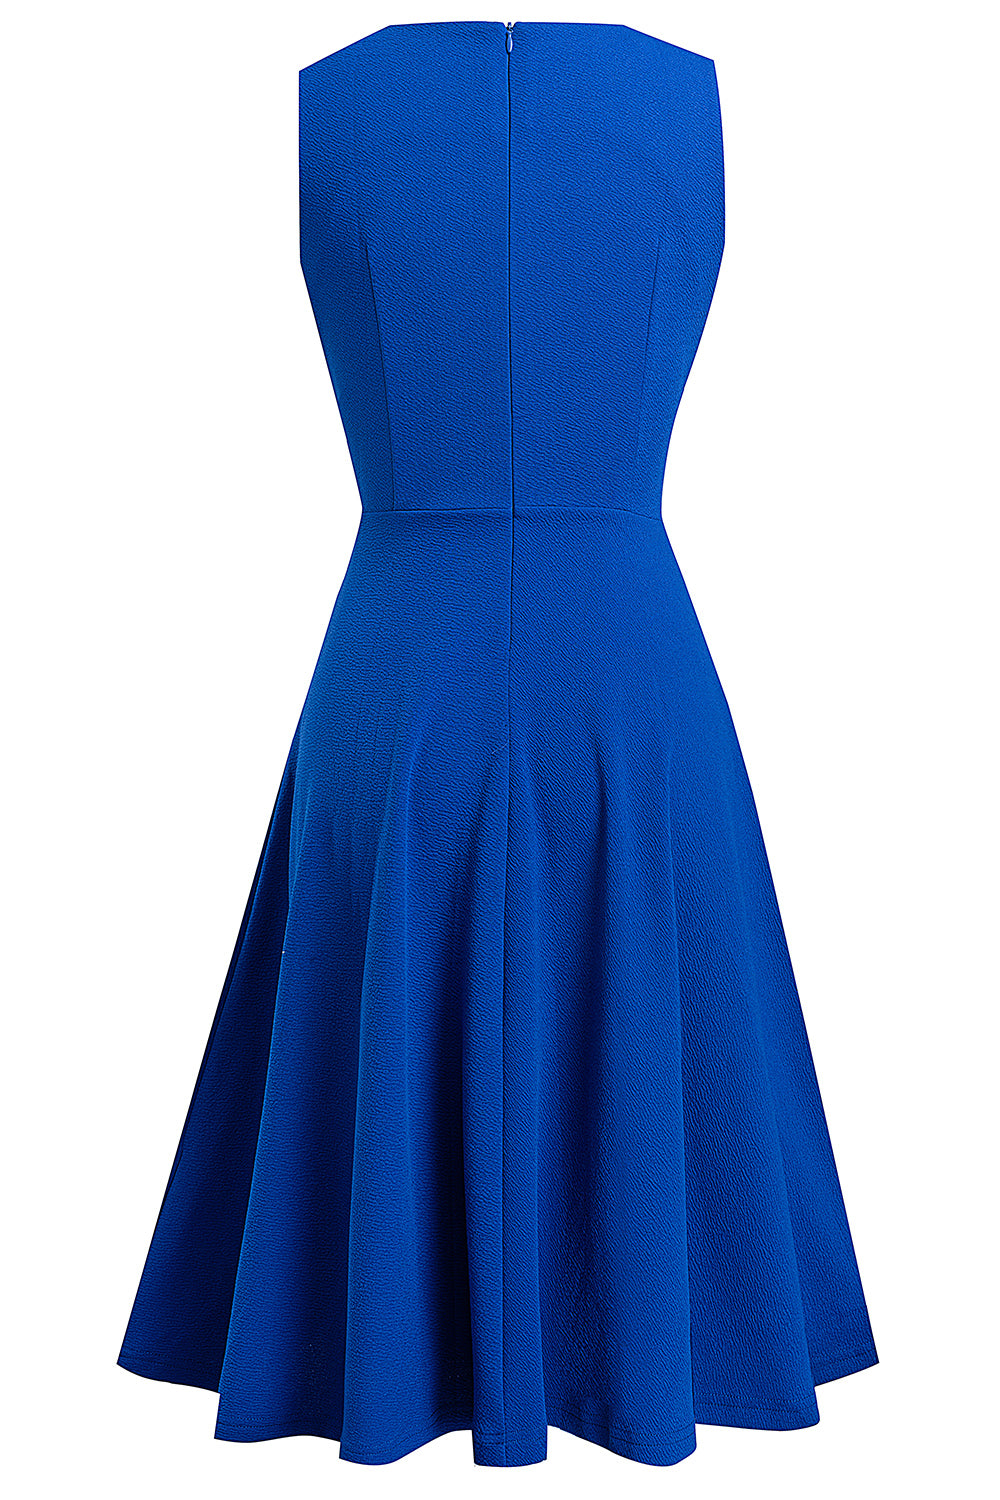 Round Neck Sleeveless Lace Trim Dress BLUE ZONE PLANET